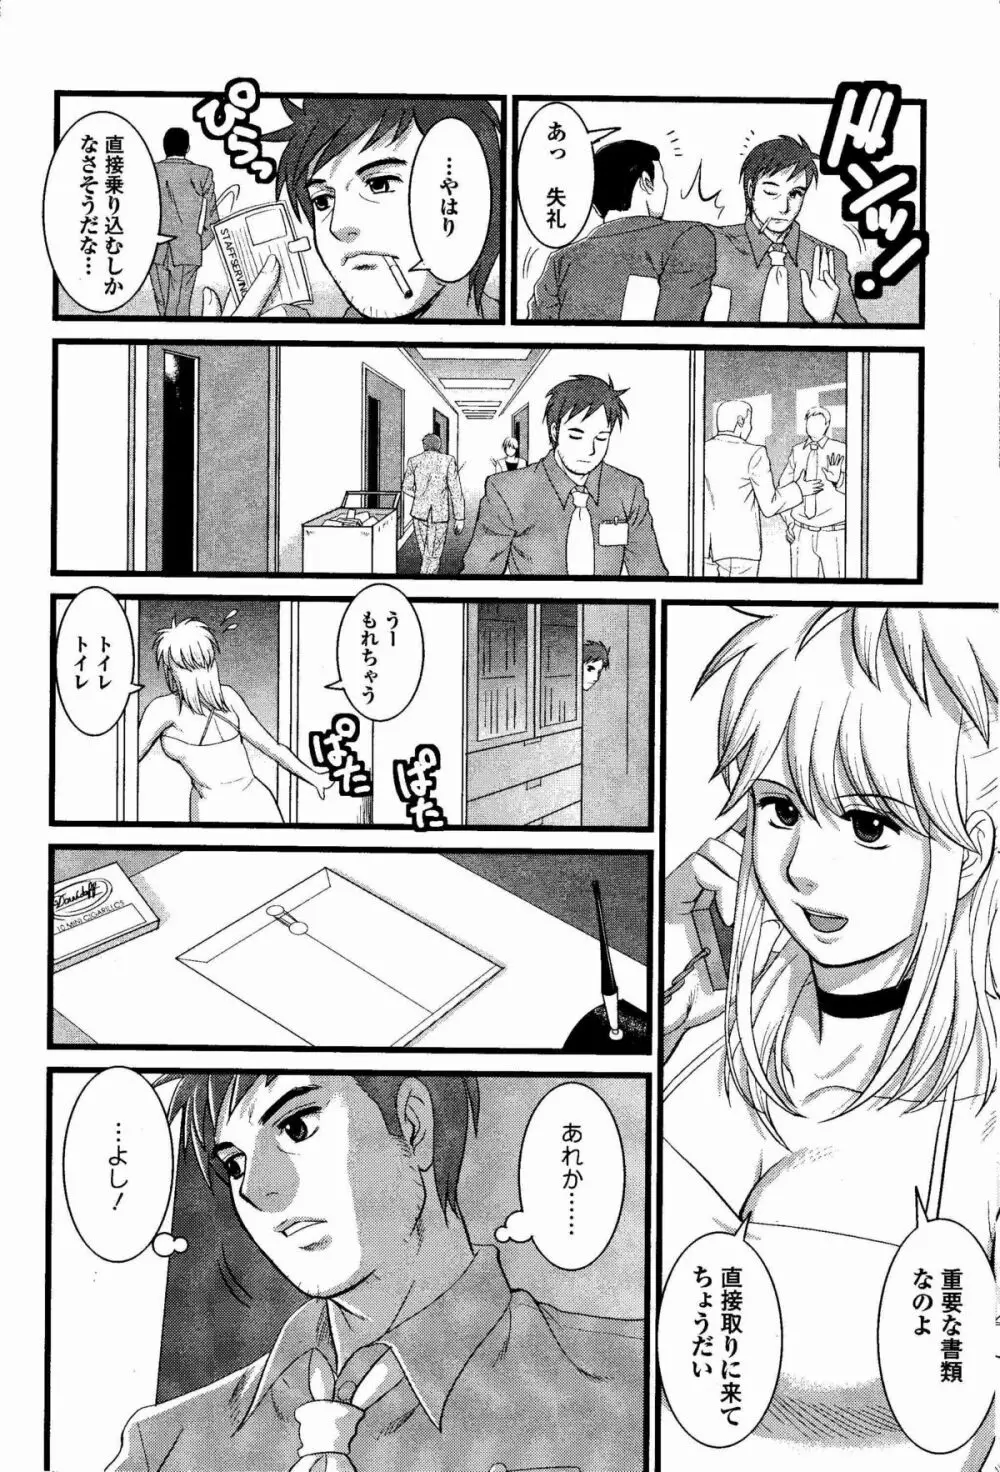 Haken no Muuko-san 7 13ページ